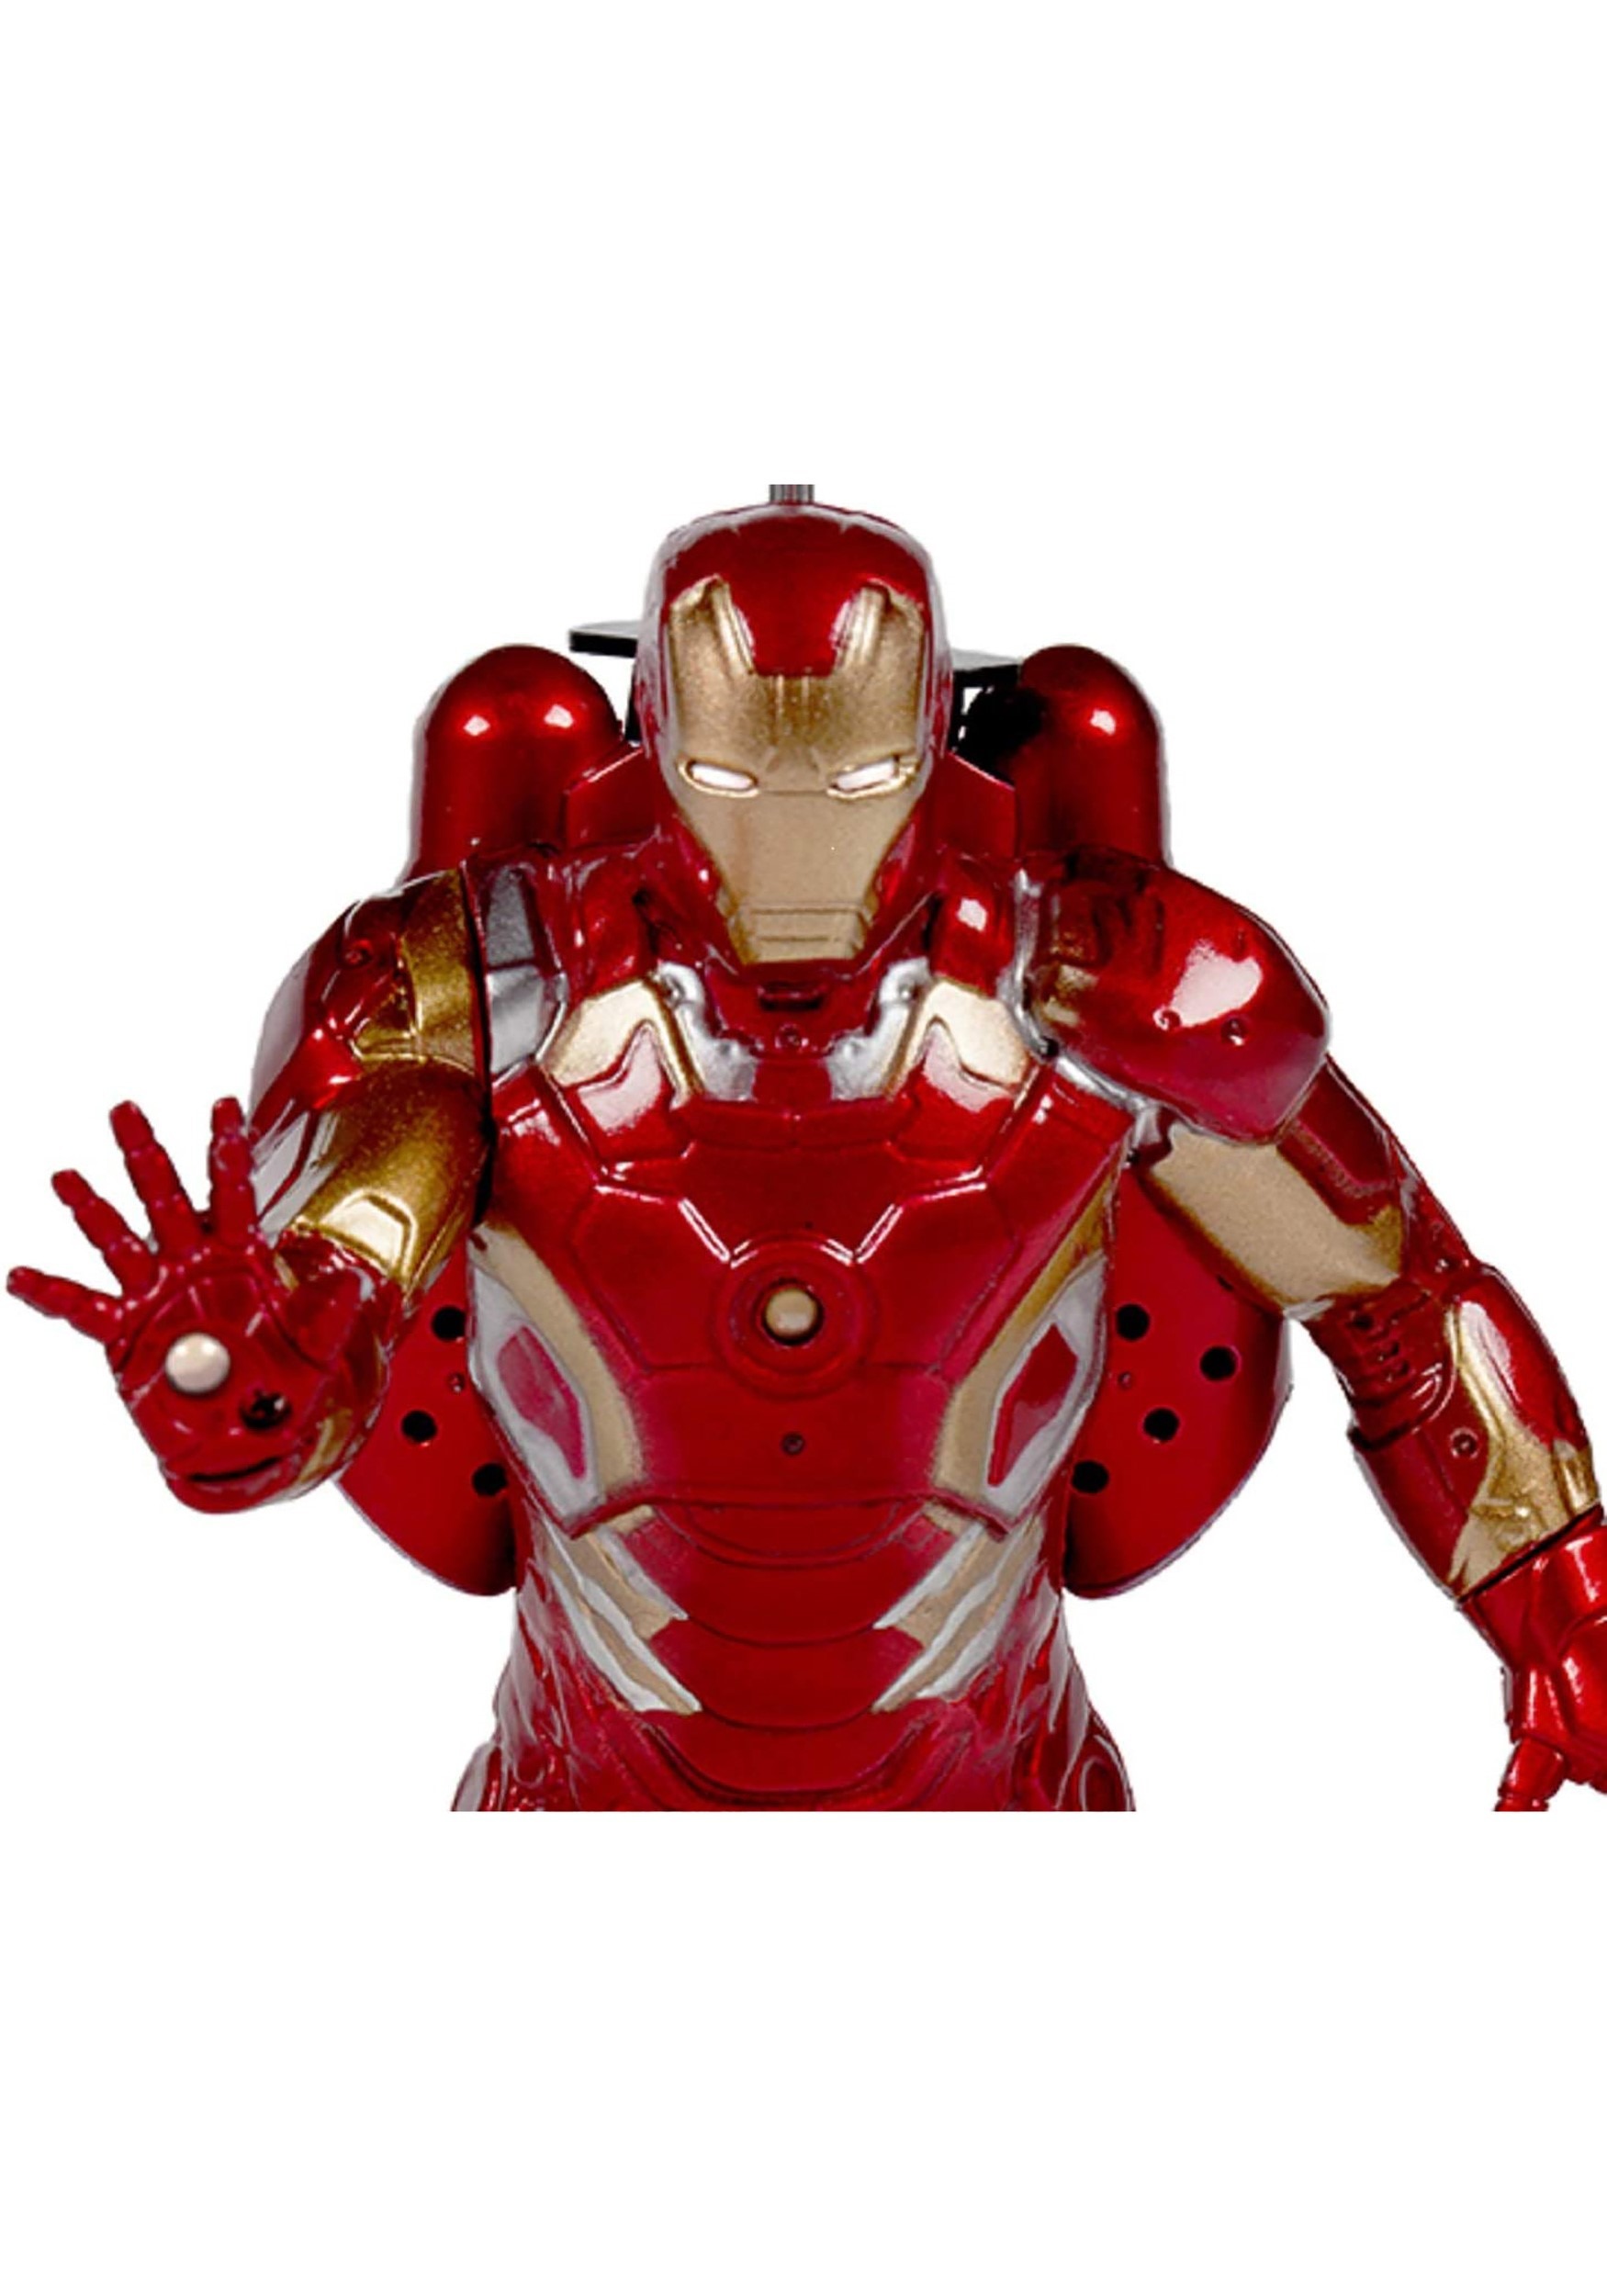 Marvel Studios Flying Iron Man Toy Deals Online Save 47 Jlcatjgobmx